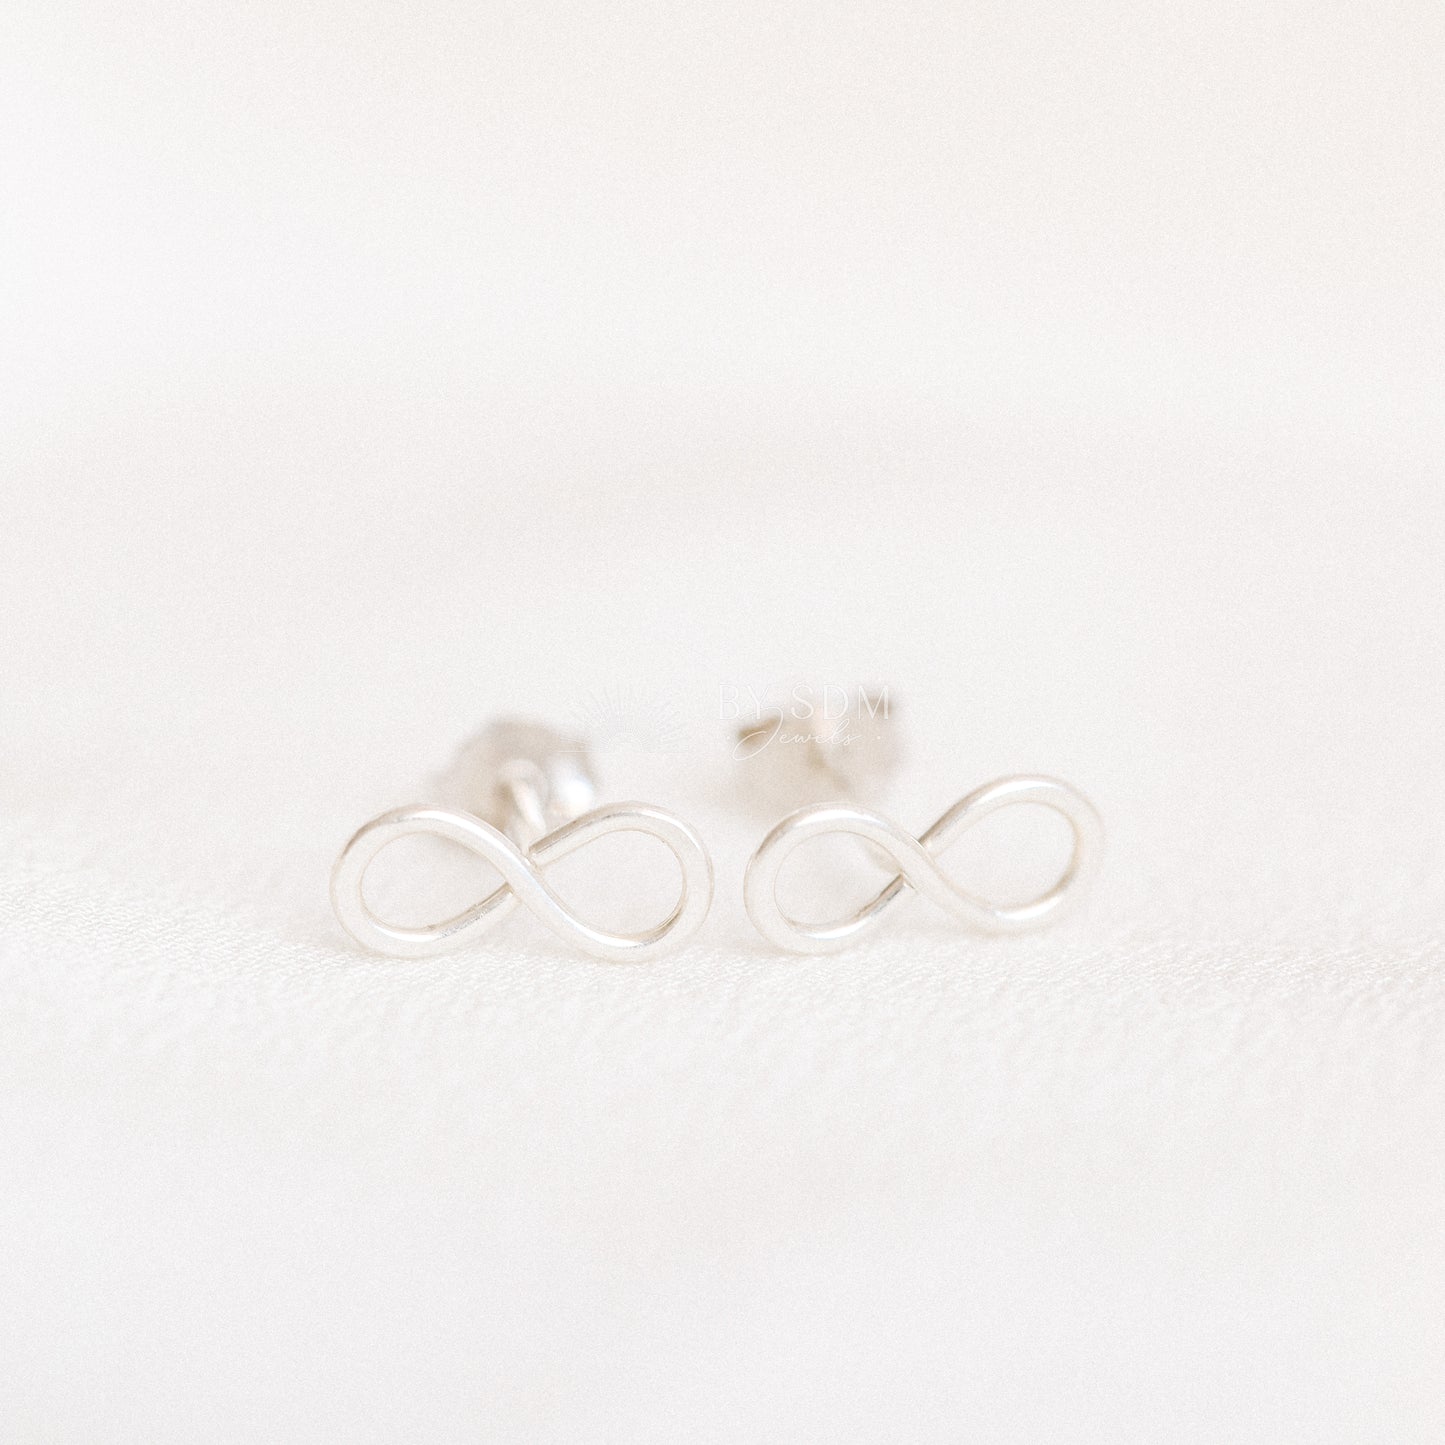 Tiny Infinity Stud Earrings Delicate 925 Sterling Silver 8 Earrings 9mm Infinity Stud Earrings Symbol of Eternity Earrings Gift for Her